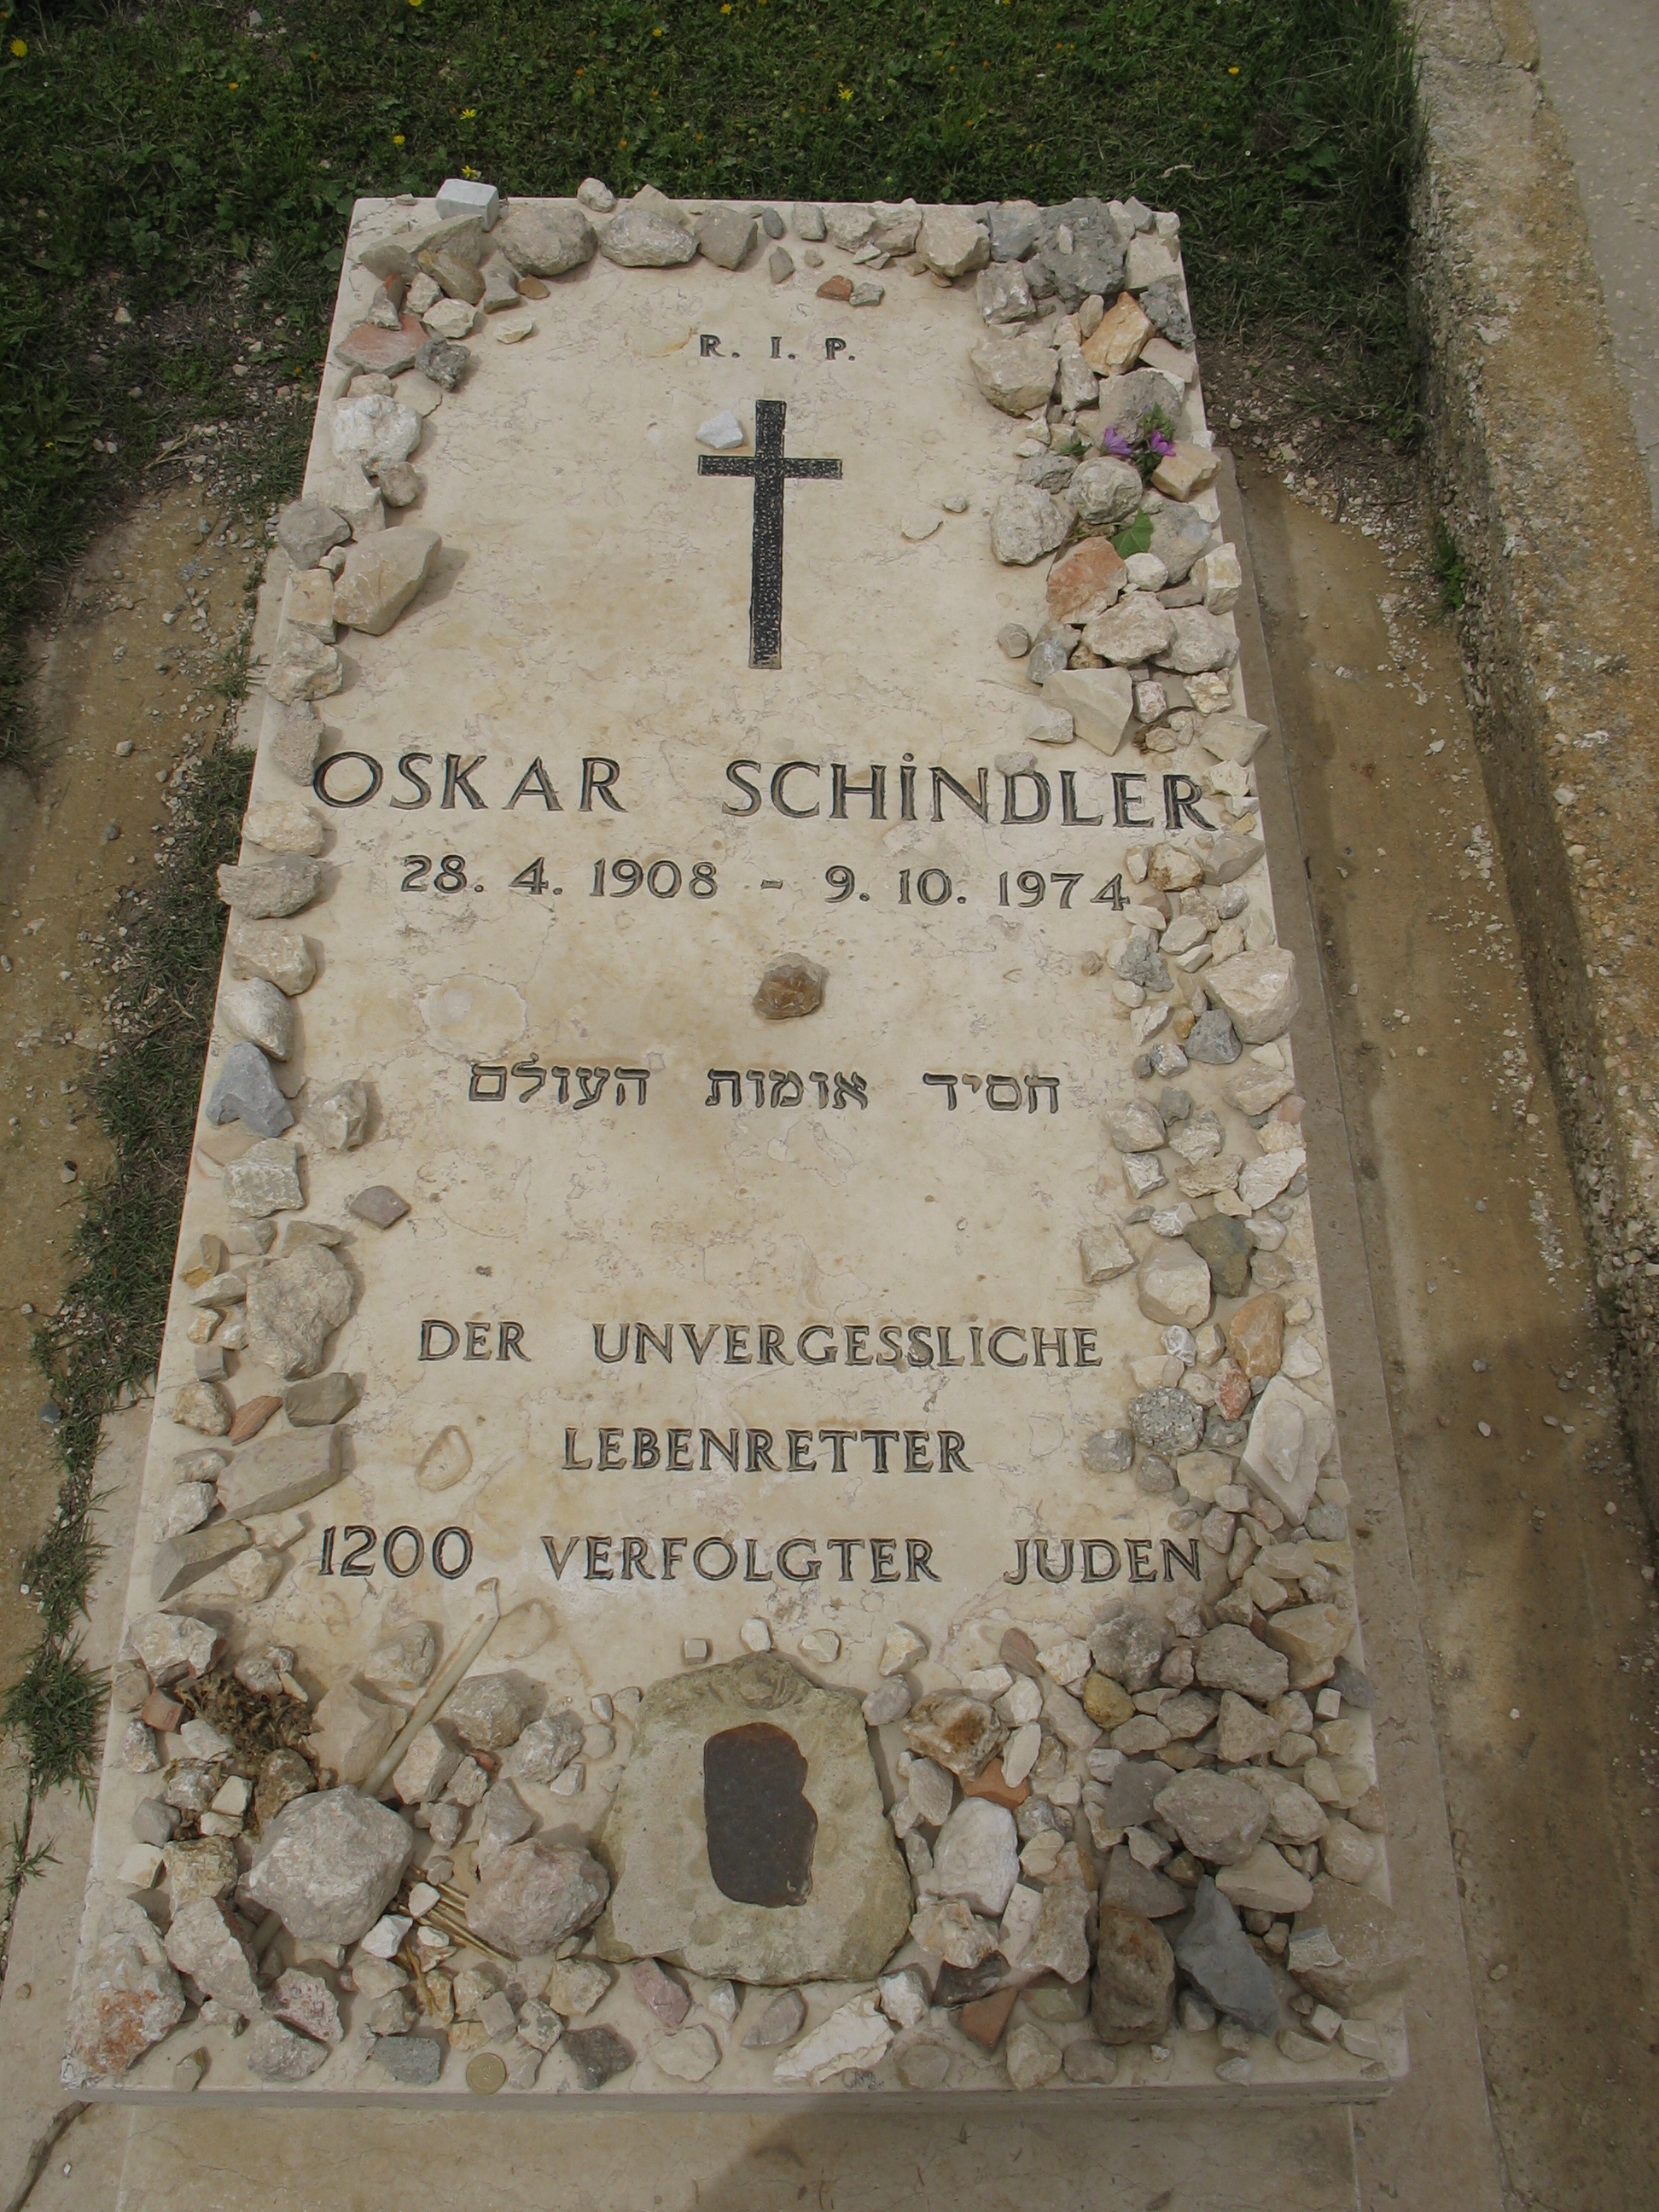 Grób Oskara Schindlera w Jerozolimie, Acmthompson at en.wikipedia, Public domain, via Wikimedia Commons